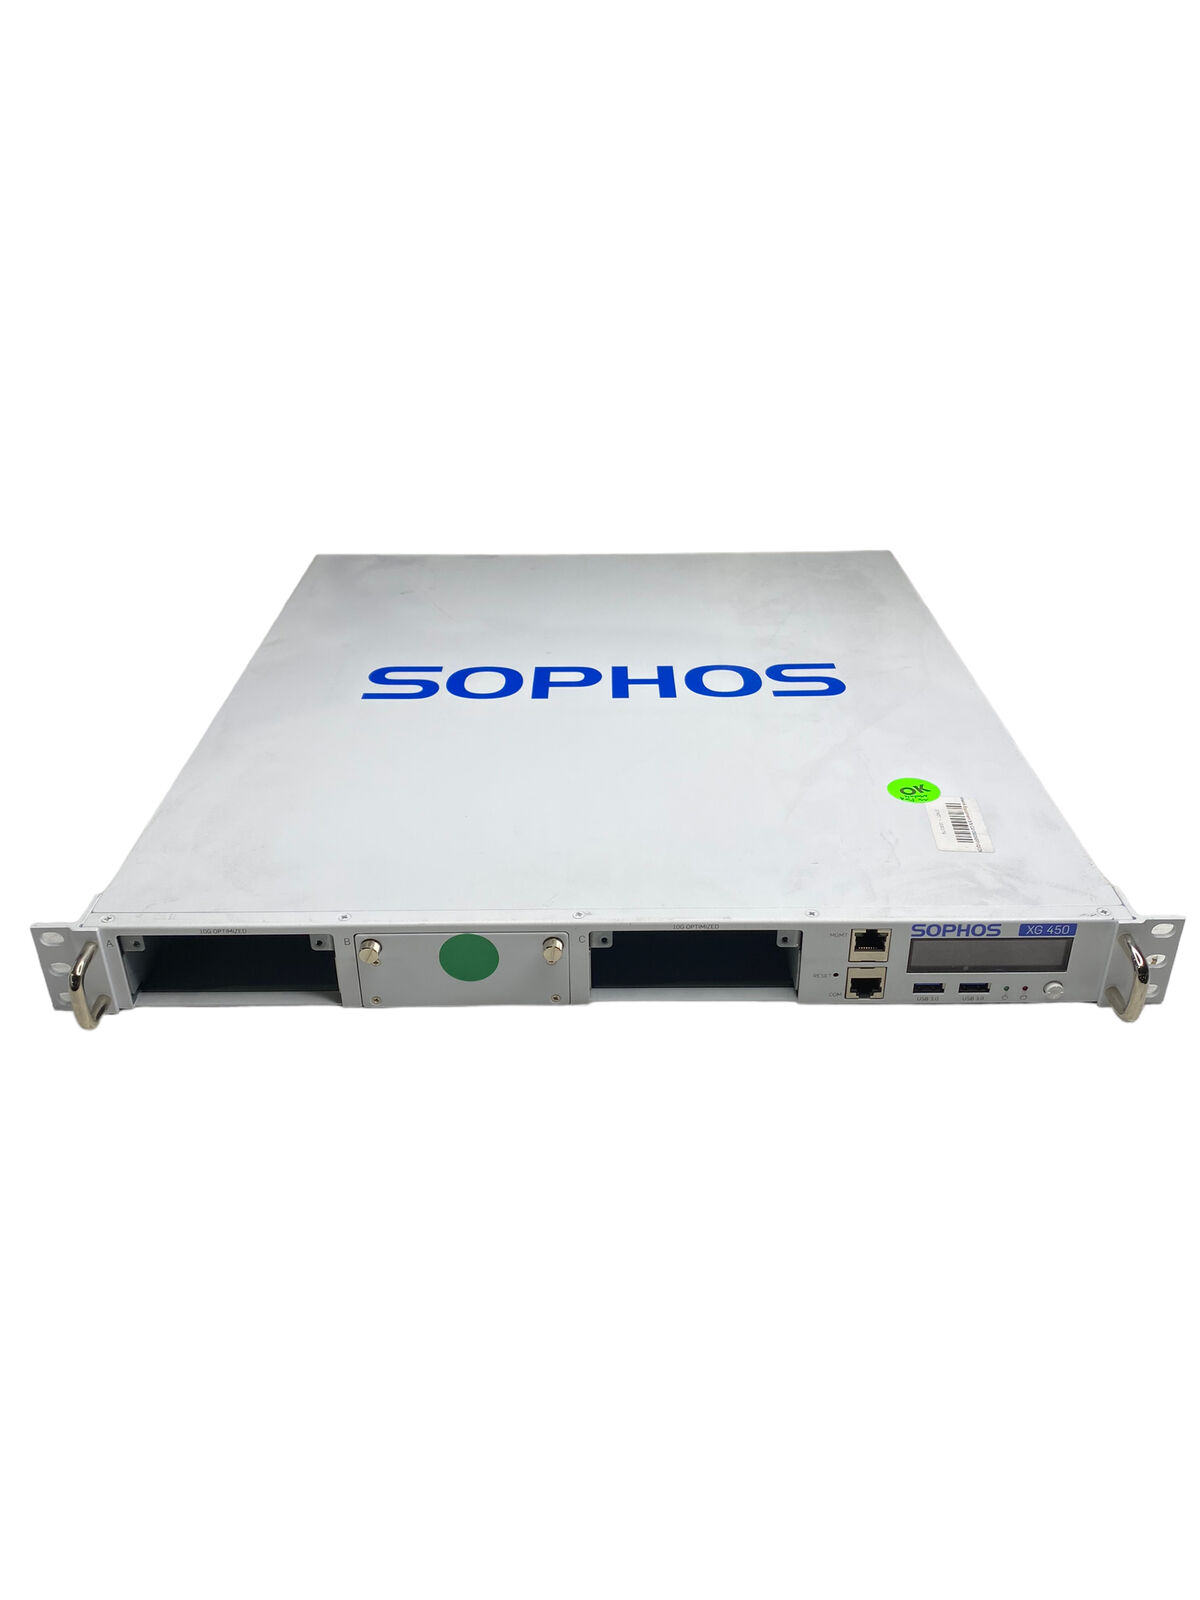 Sophos XG 450 Rev2 Firewall Security Appliance Rack Mountable